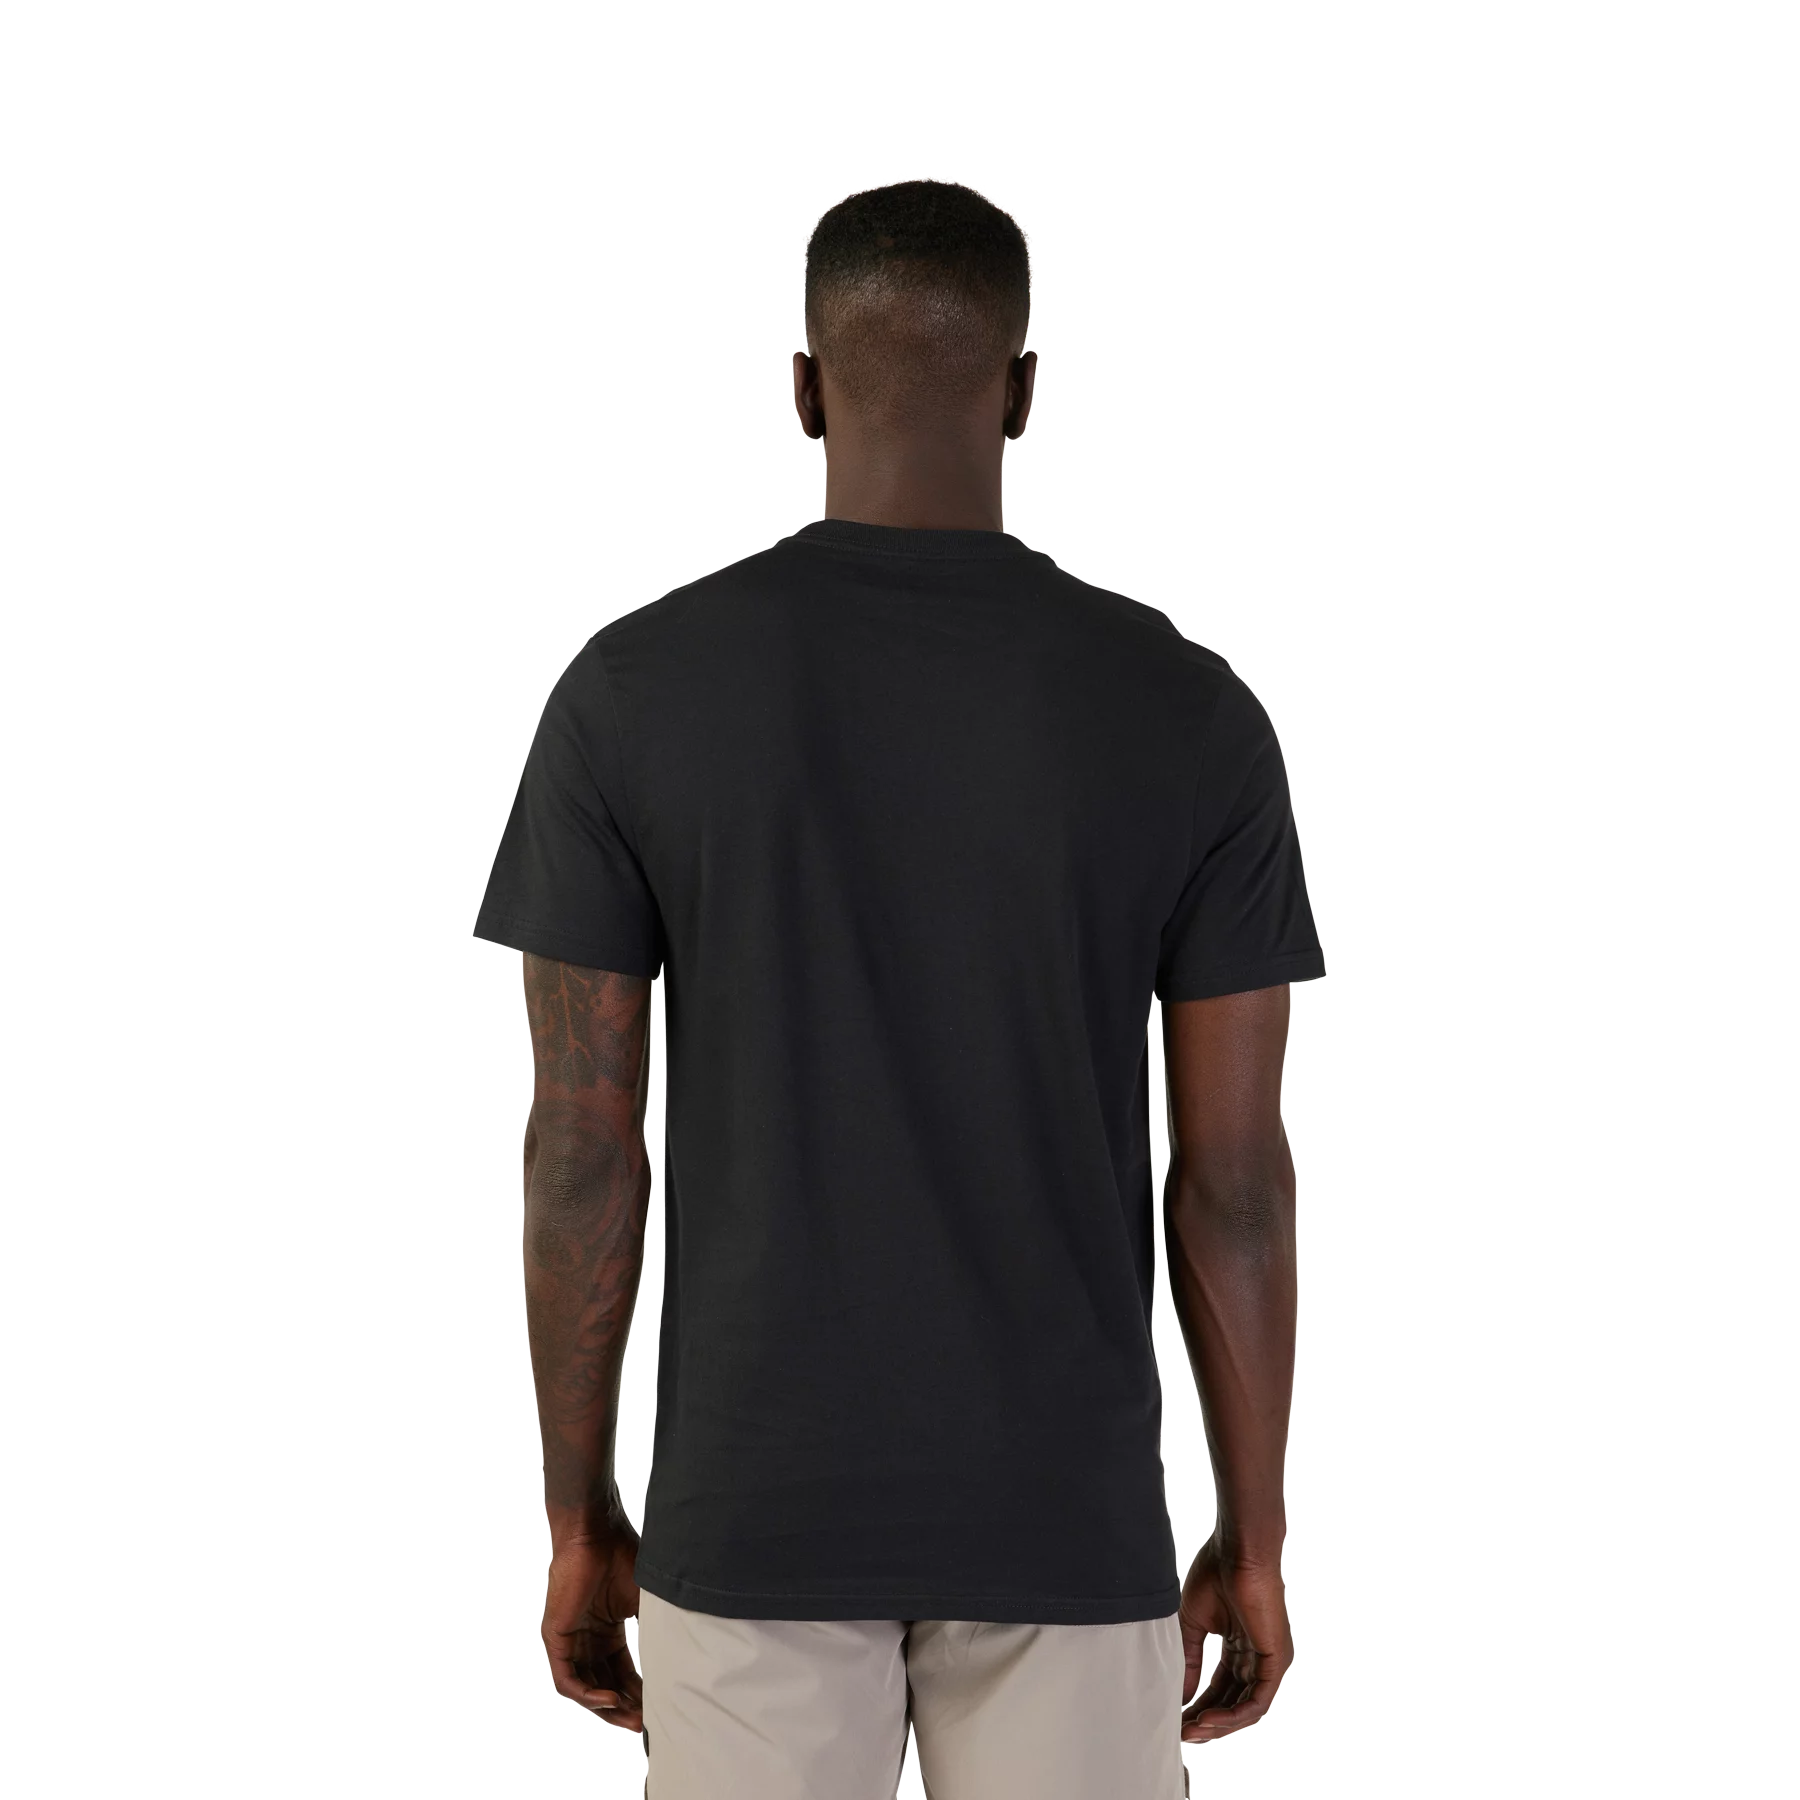 Fox Premium-T-Shirt Absolute Schwarz